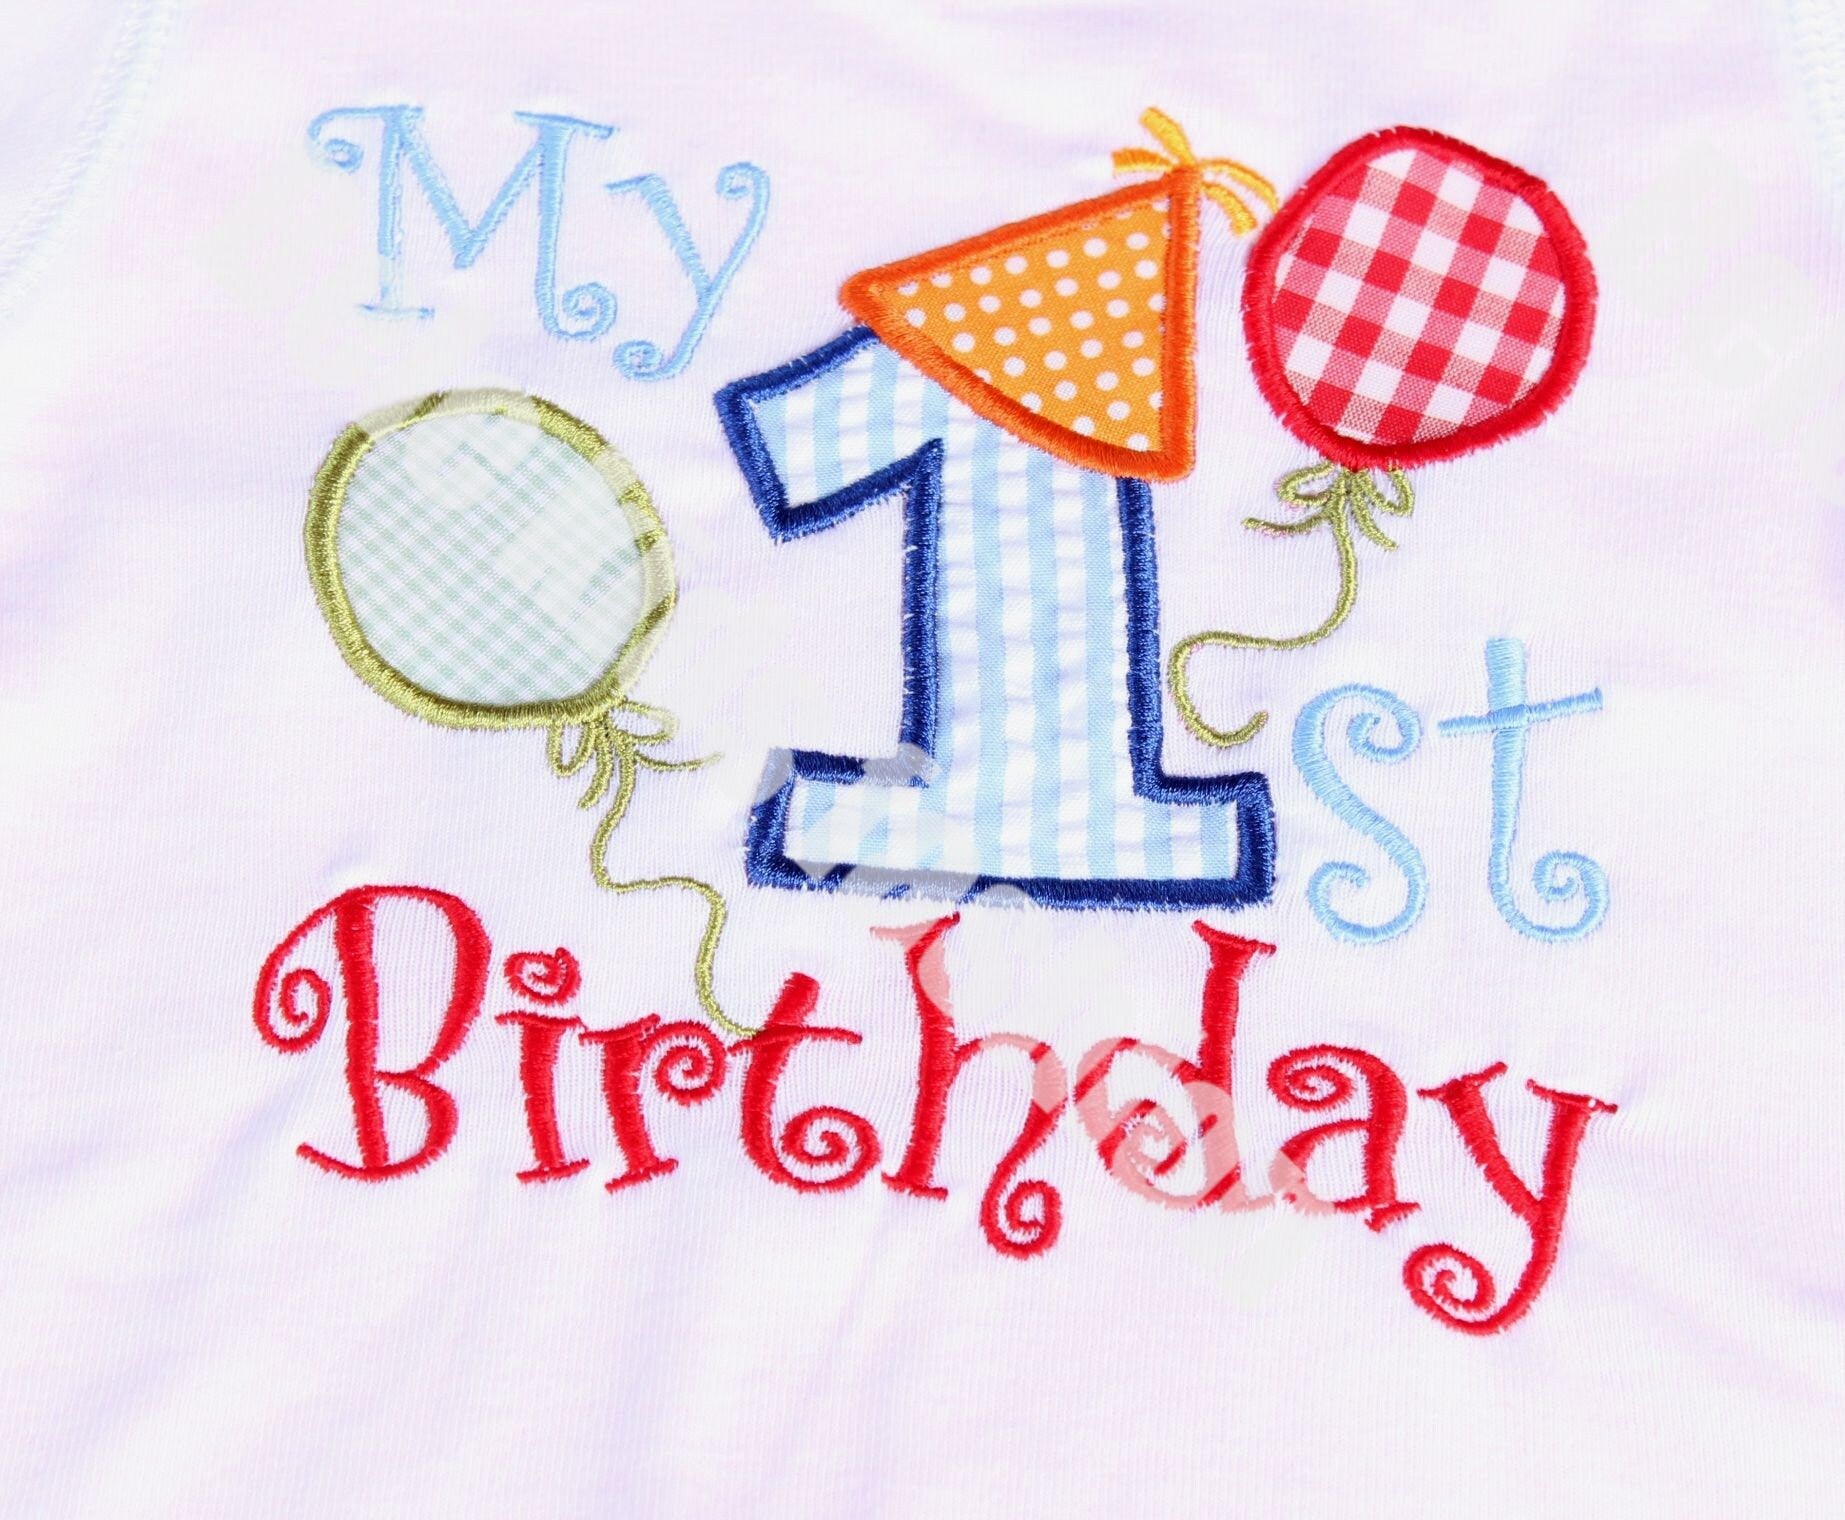 First birthday shirt